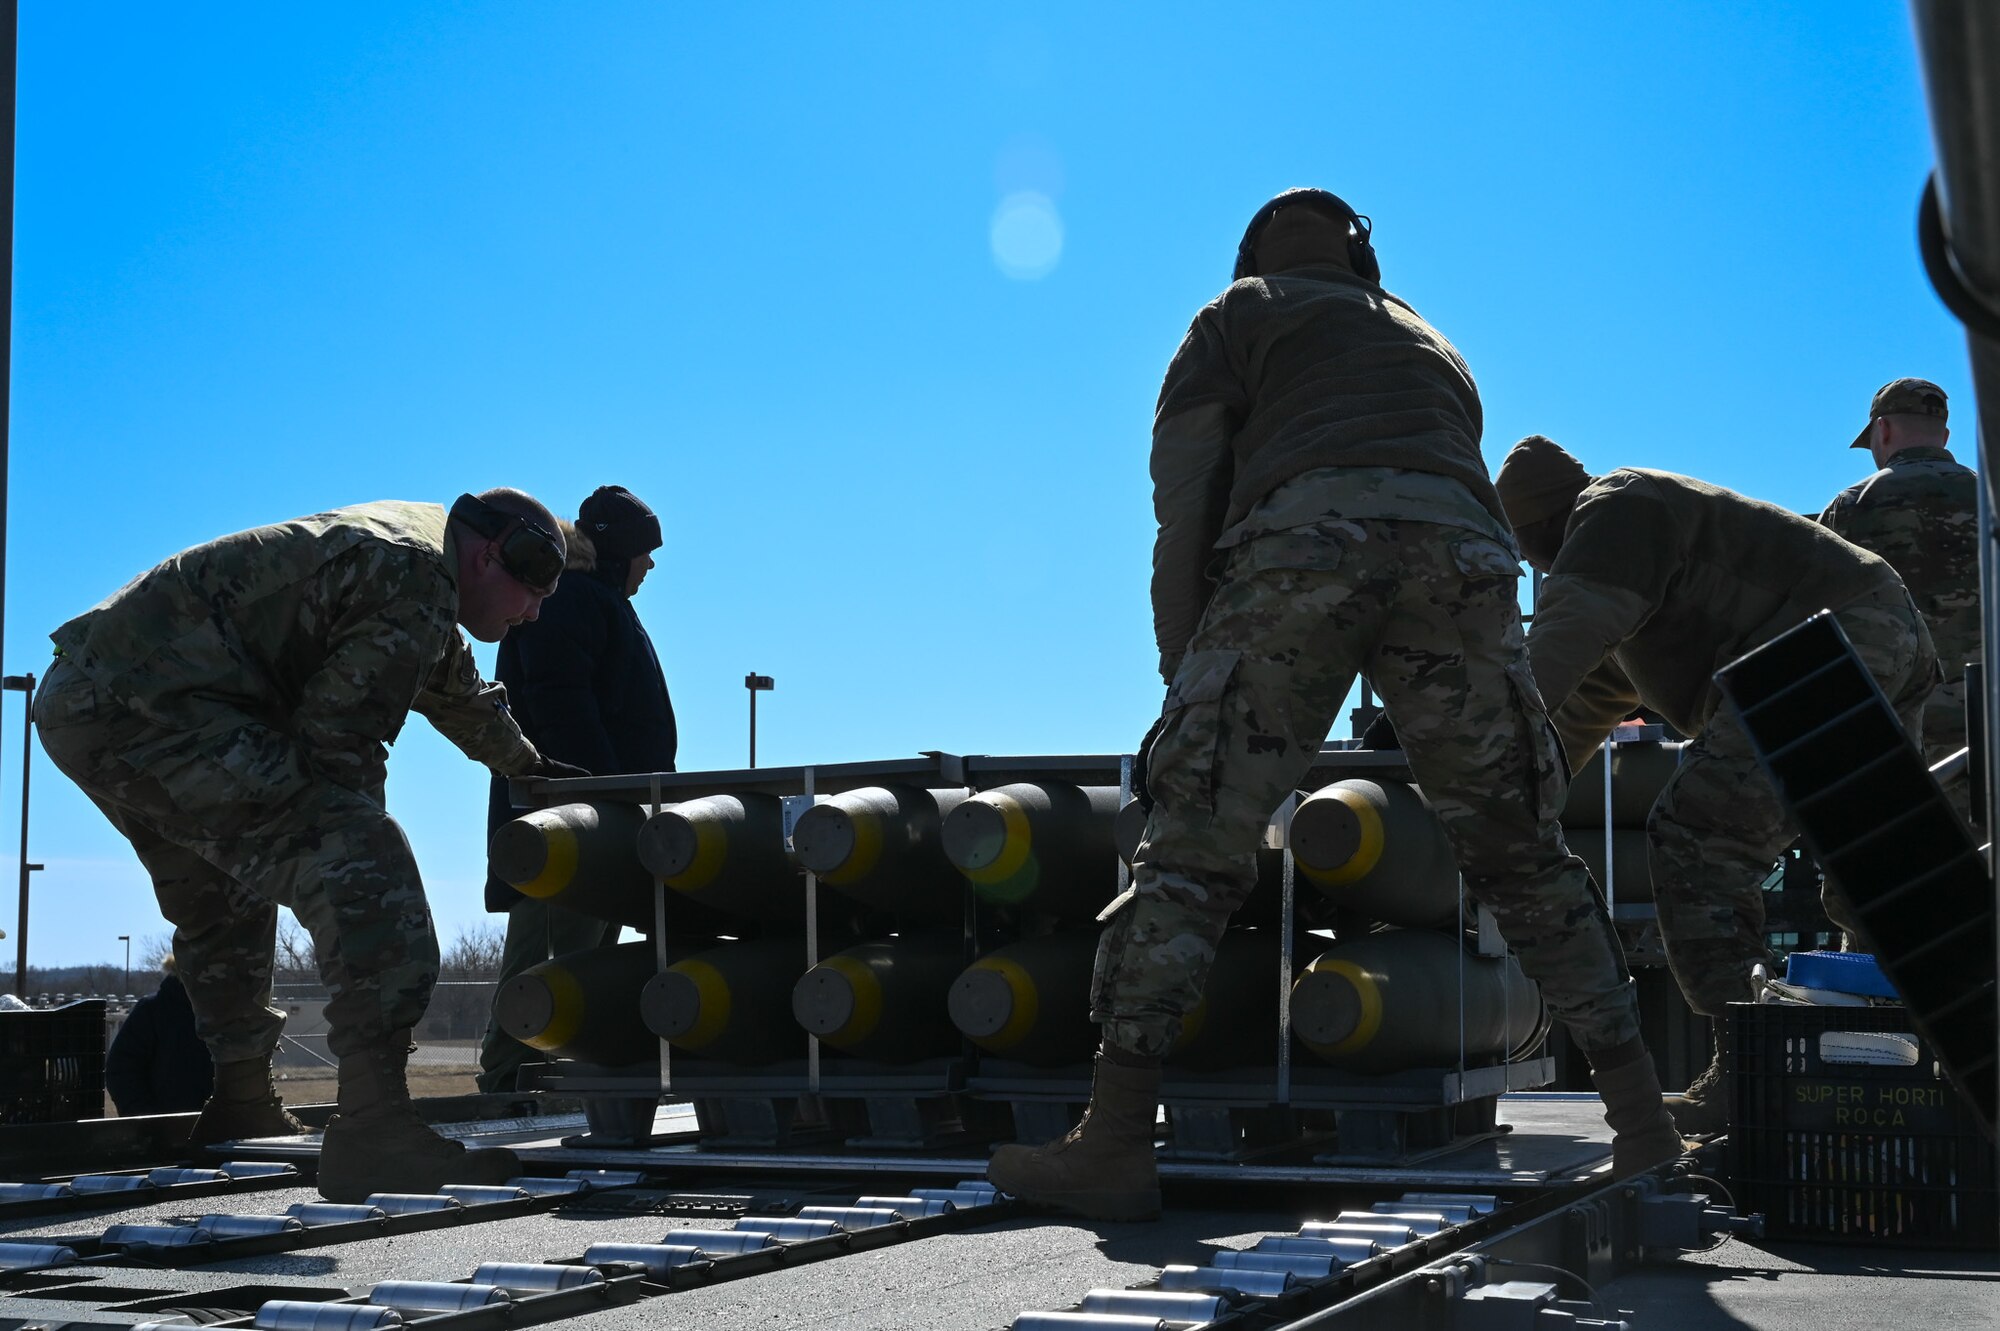 airmen loading munitions onto truck